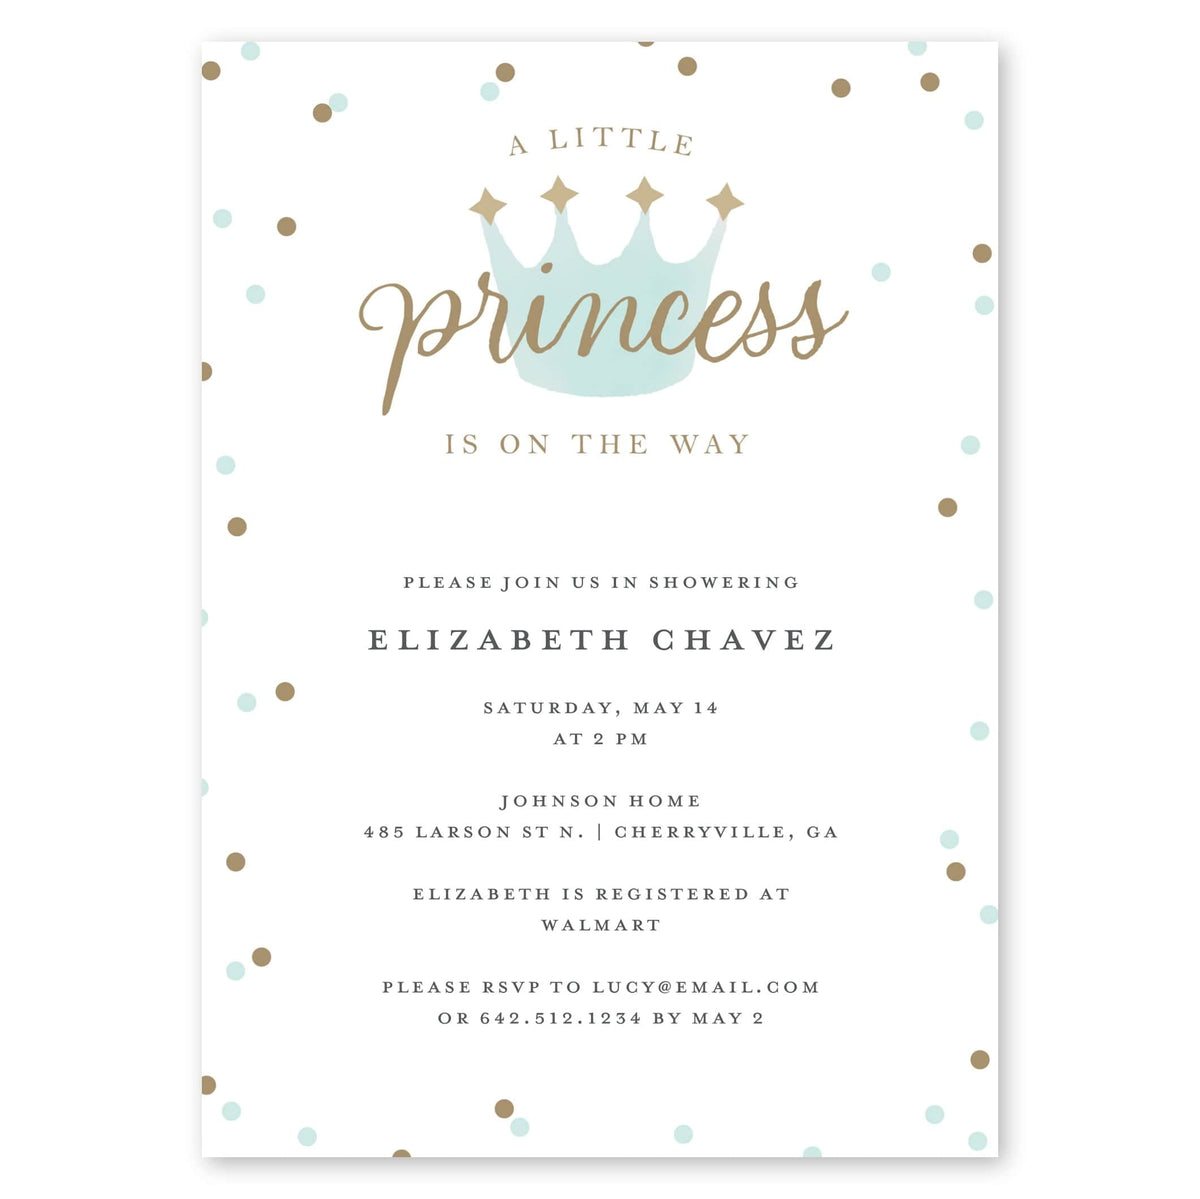 A Little Princess Baby Shower Invitation Seafoam Gartner Studios Baby Shower